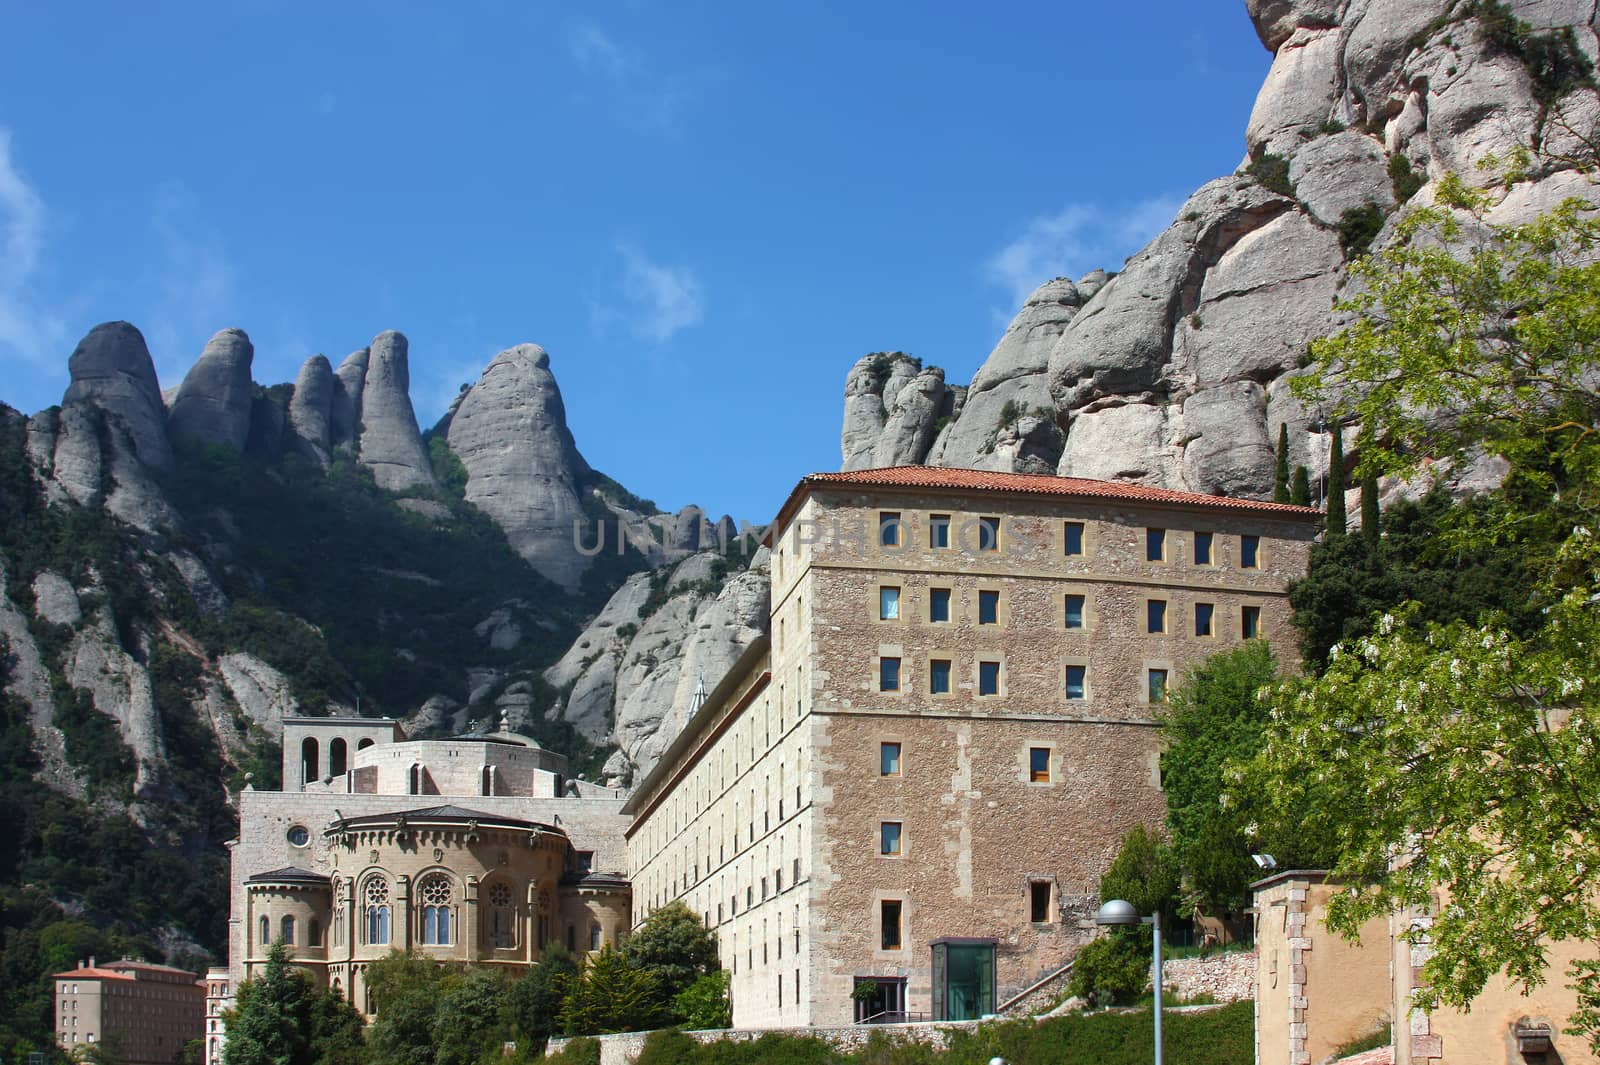 Santa Maria de Montserrat is a Benedictine abbey located on the mountain of Montserrat, in Monistrol de Montserrat, in Catalonia, Spain. The monastery is Catalonia's most important religious retreat